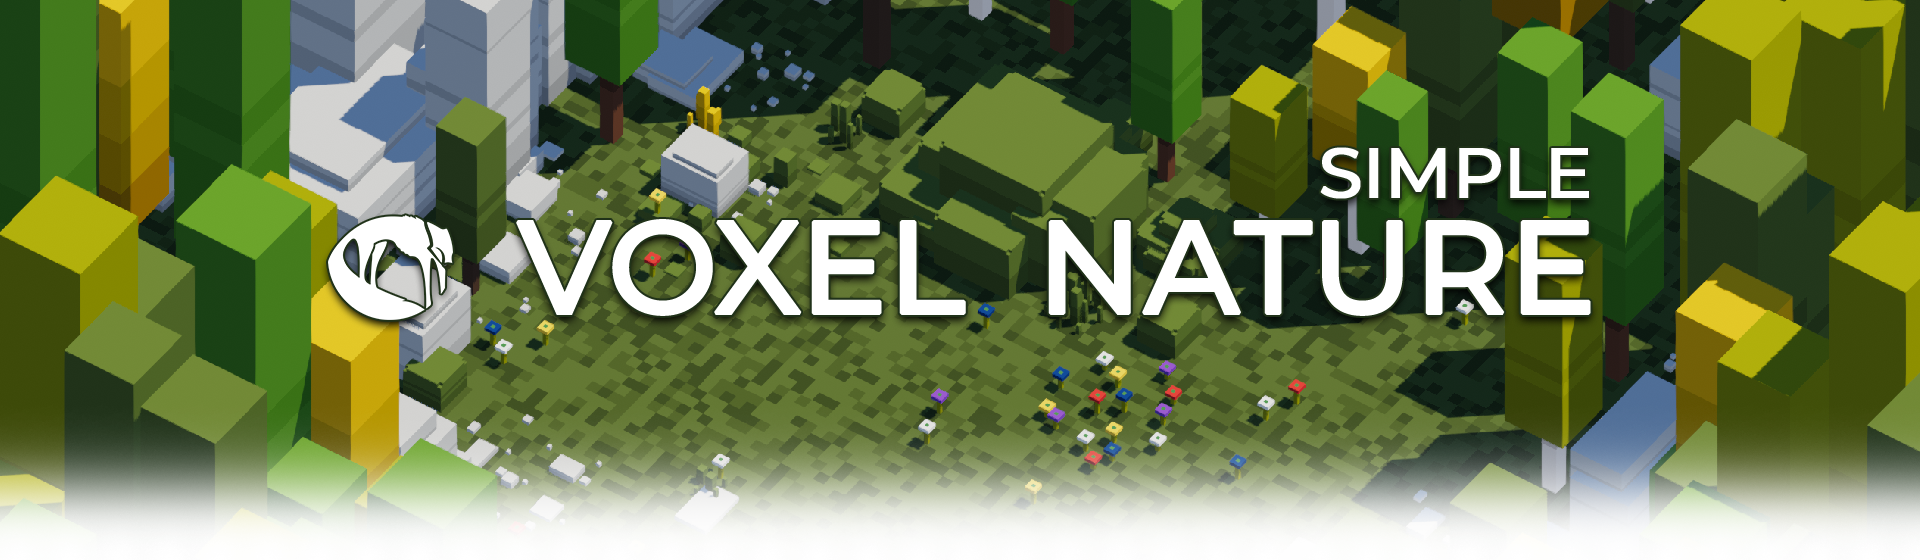 Voxel - Simple Nature